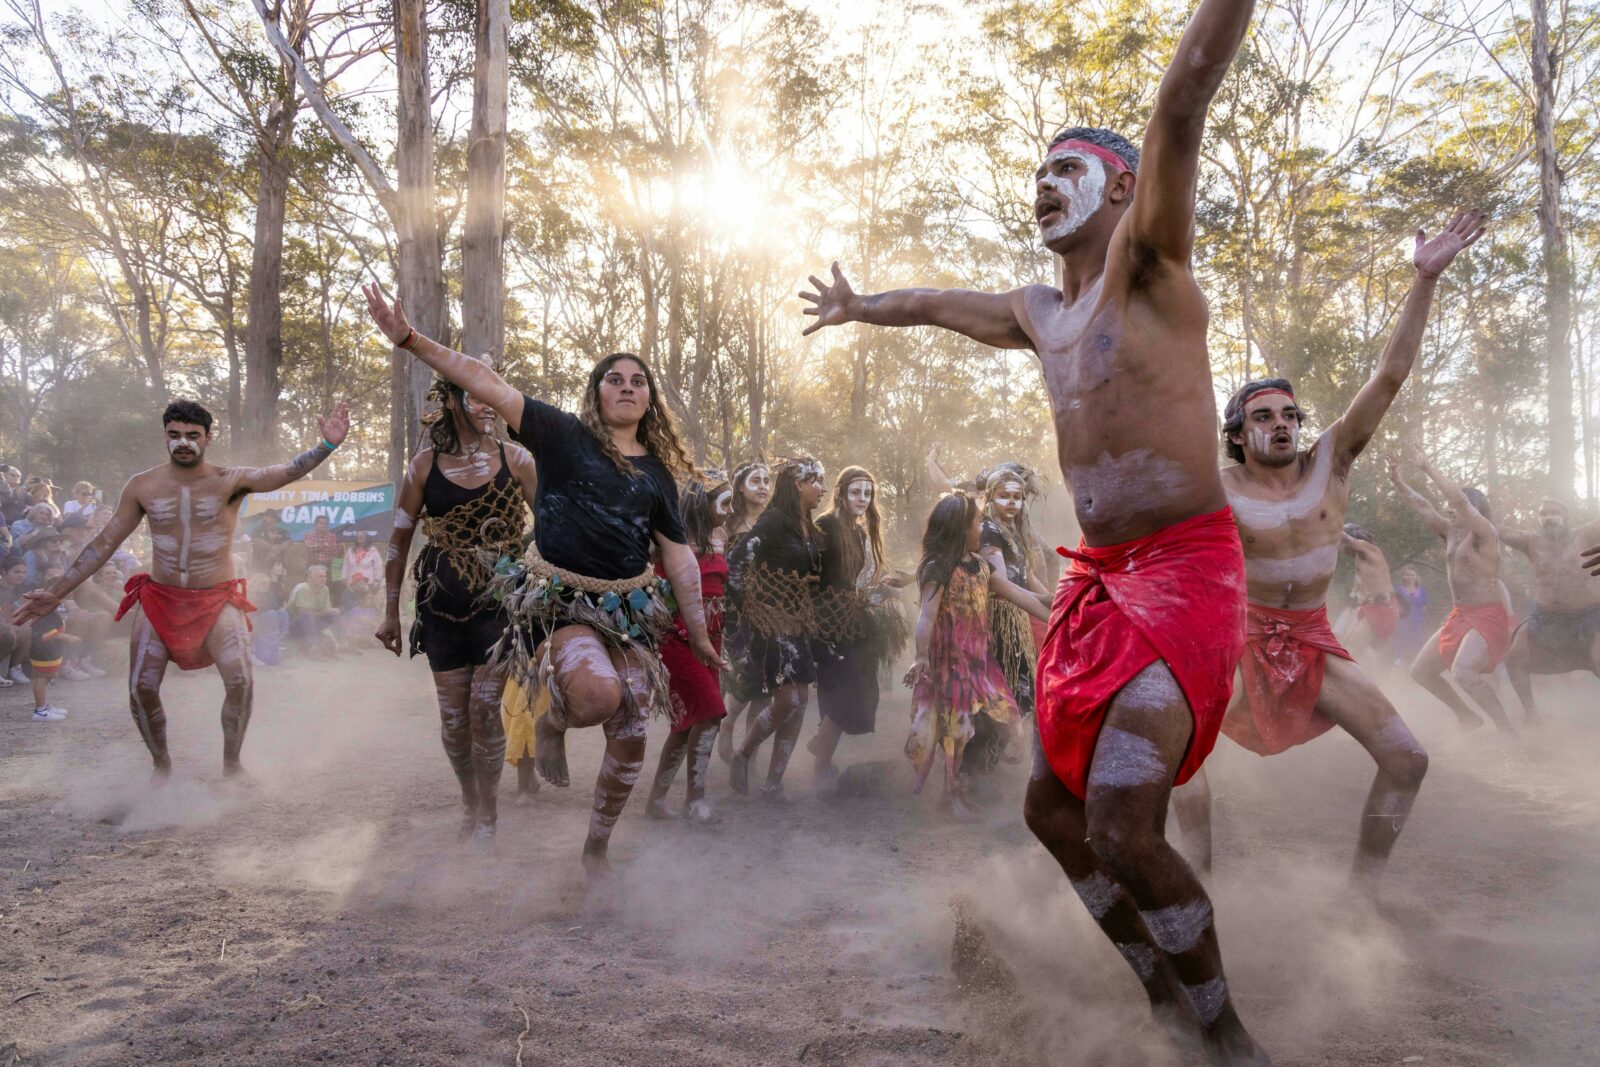 Aboriginal dancers dancing in the dust at Giiyong Festival